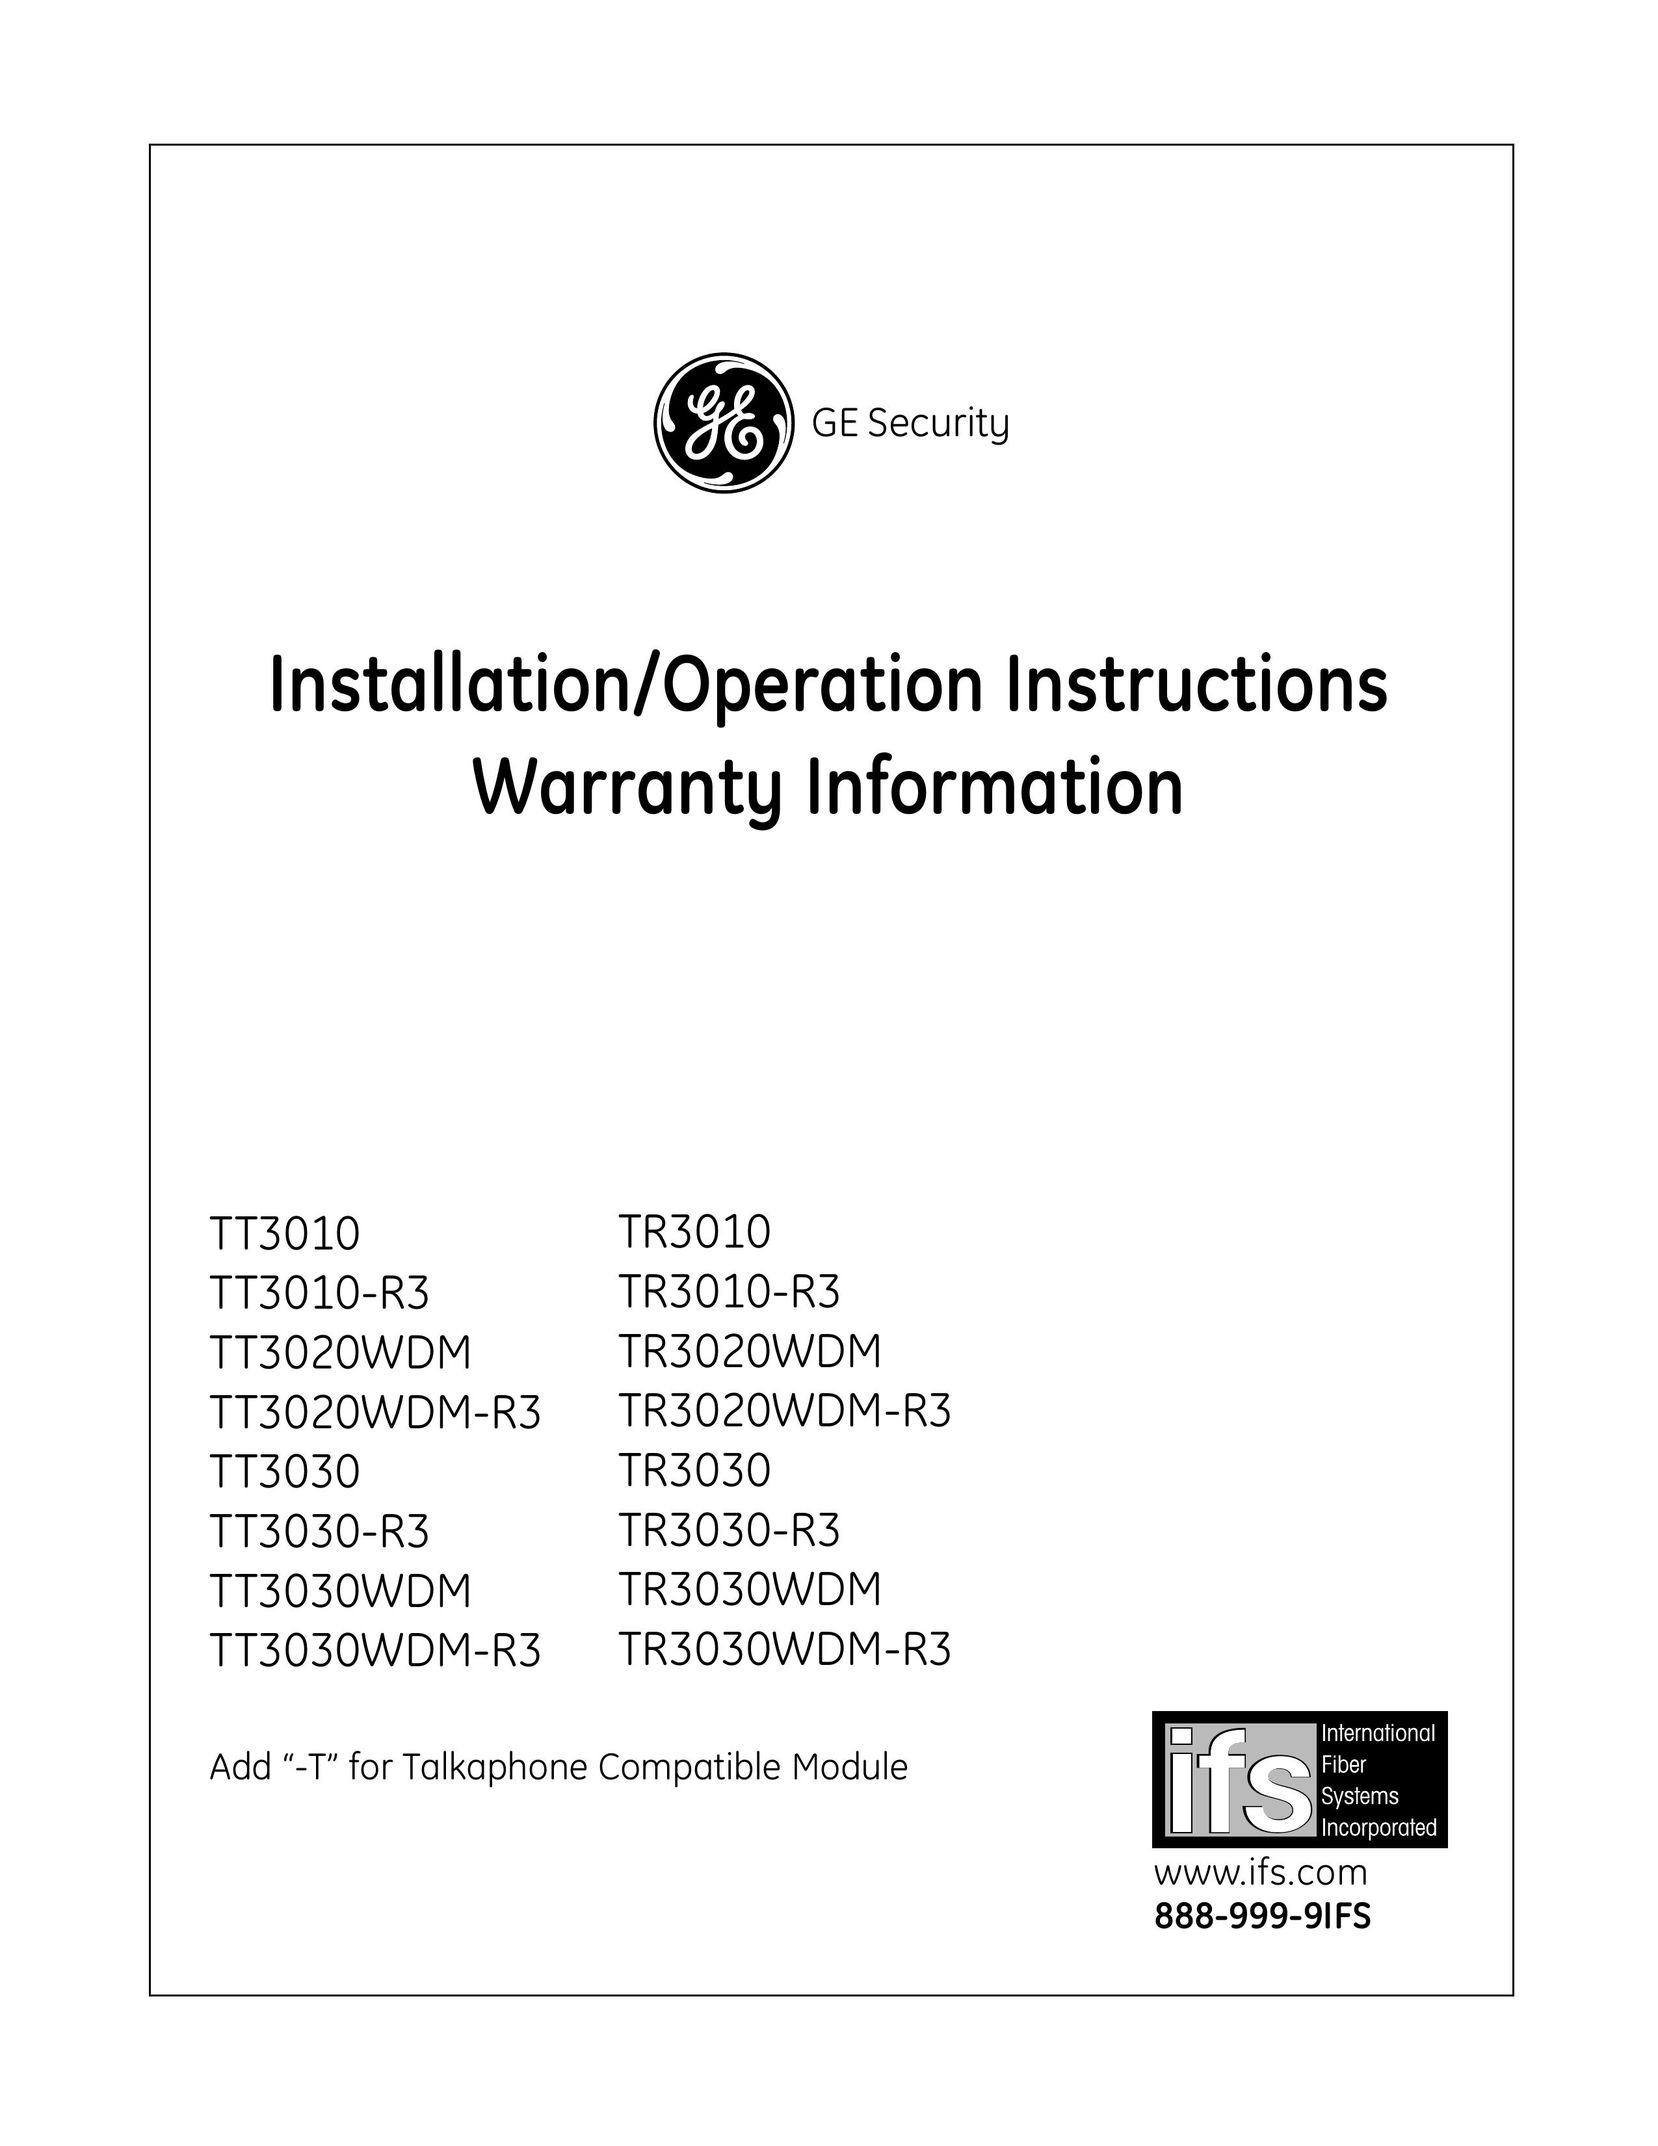 GE TT3020WDM Telephone Accessories User Manual